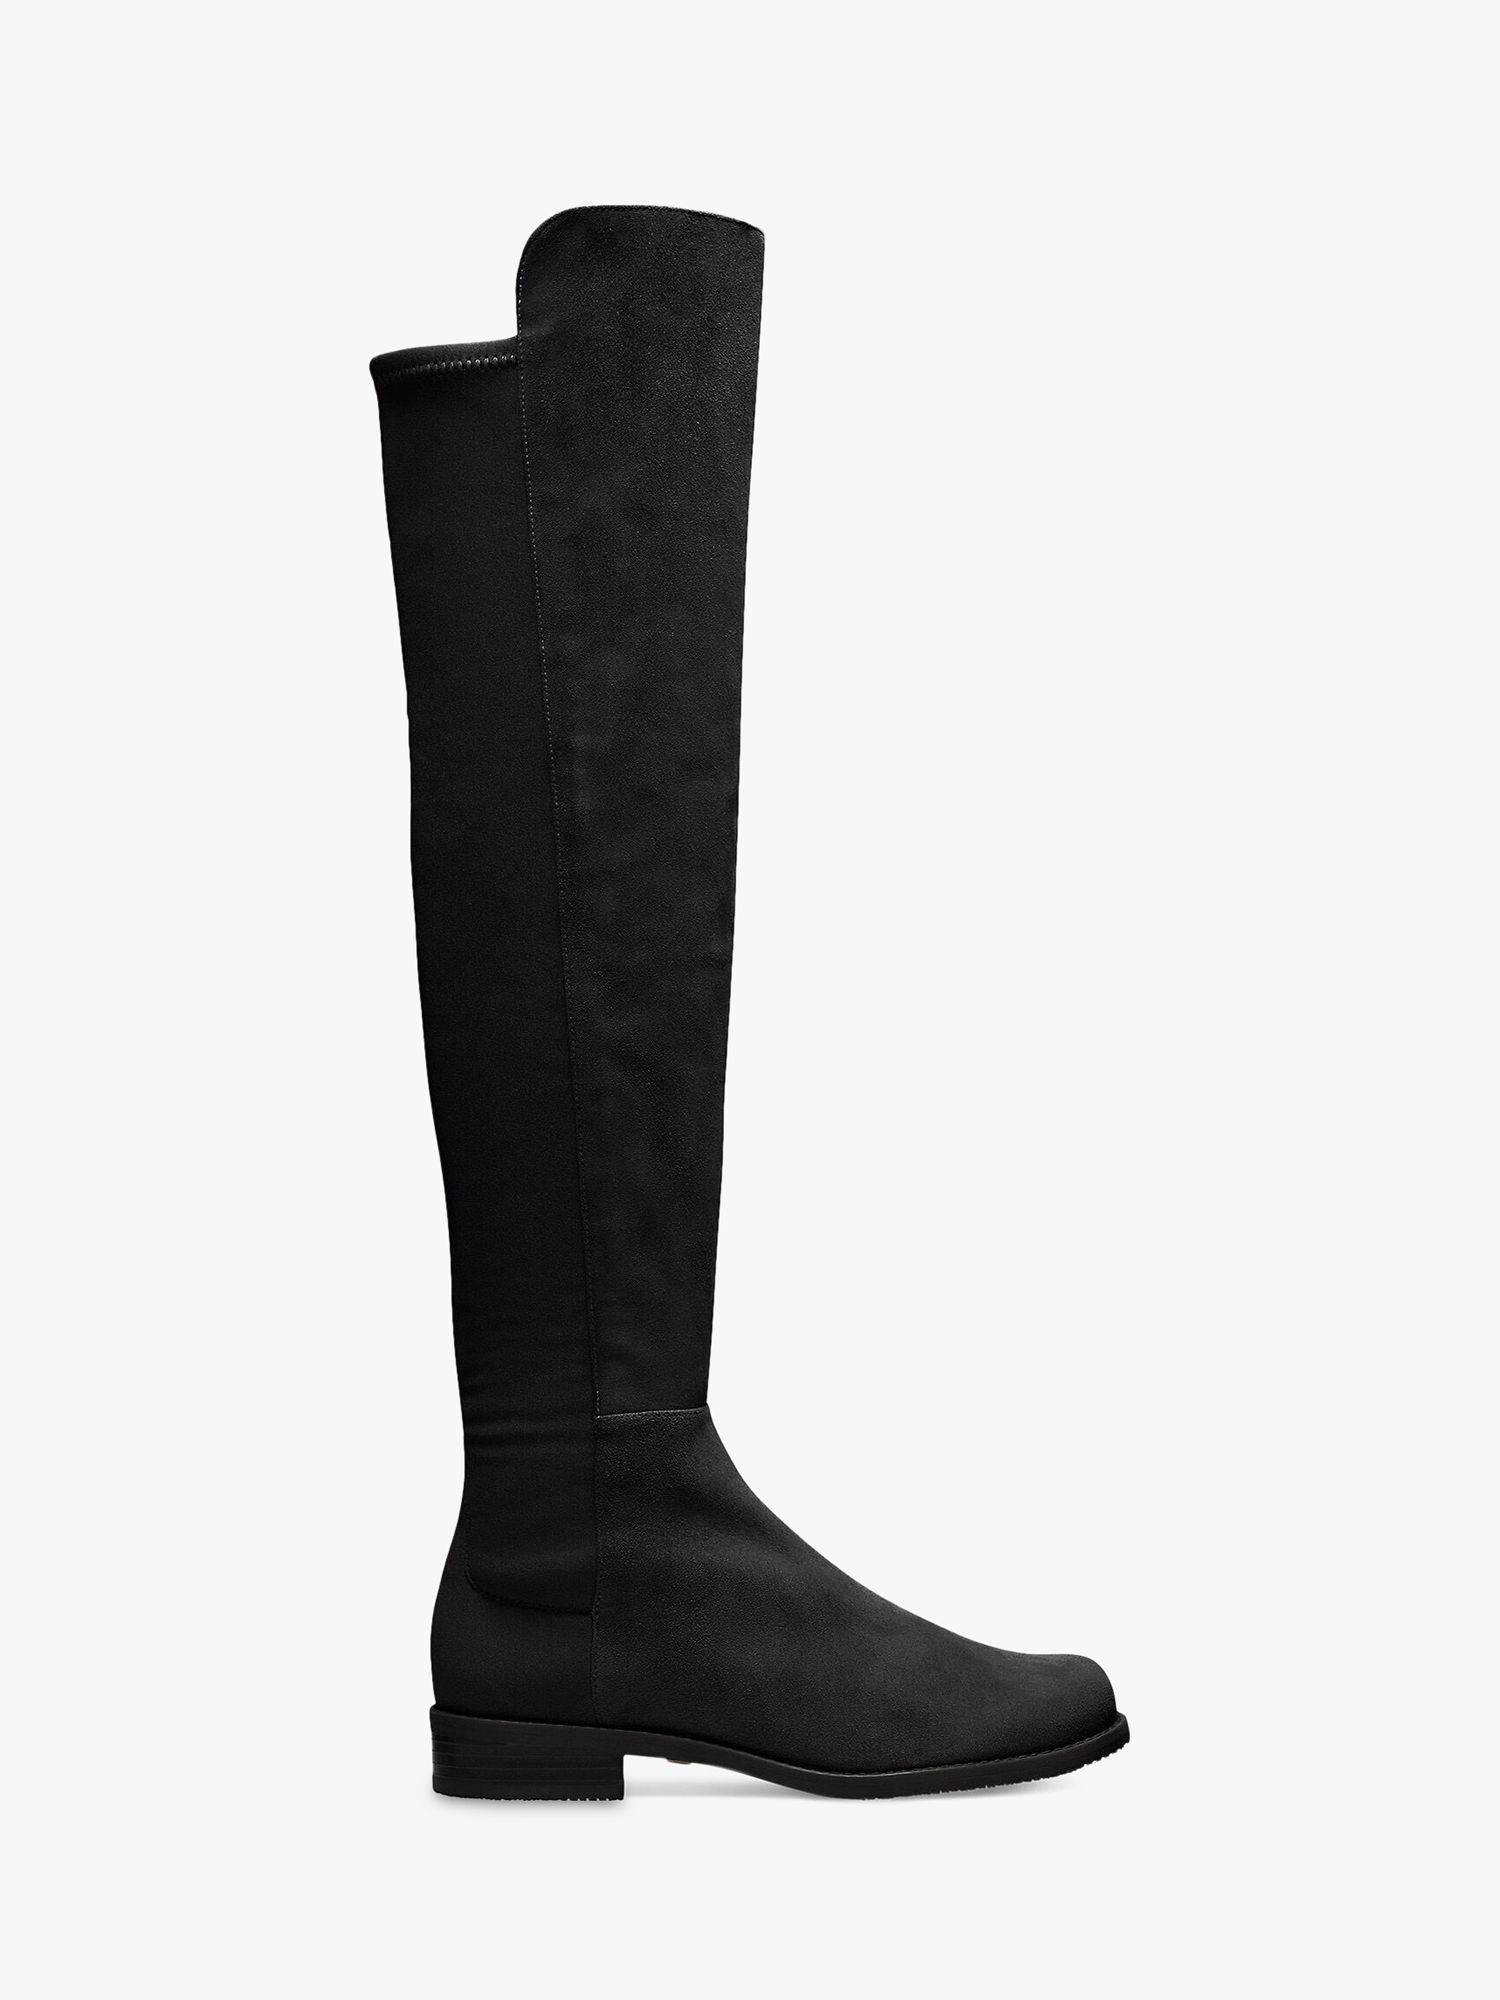 Stuart Weitzman 5050 Suede Long Knee Boots, Black at John Lewis & Partners